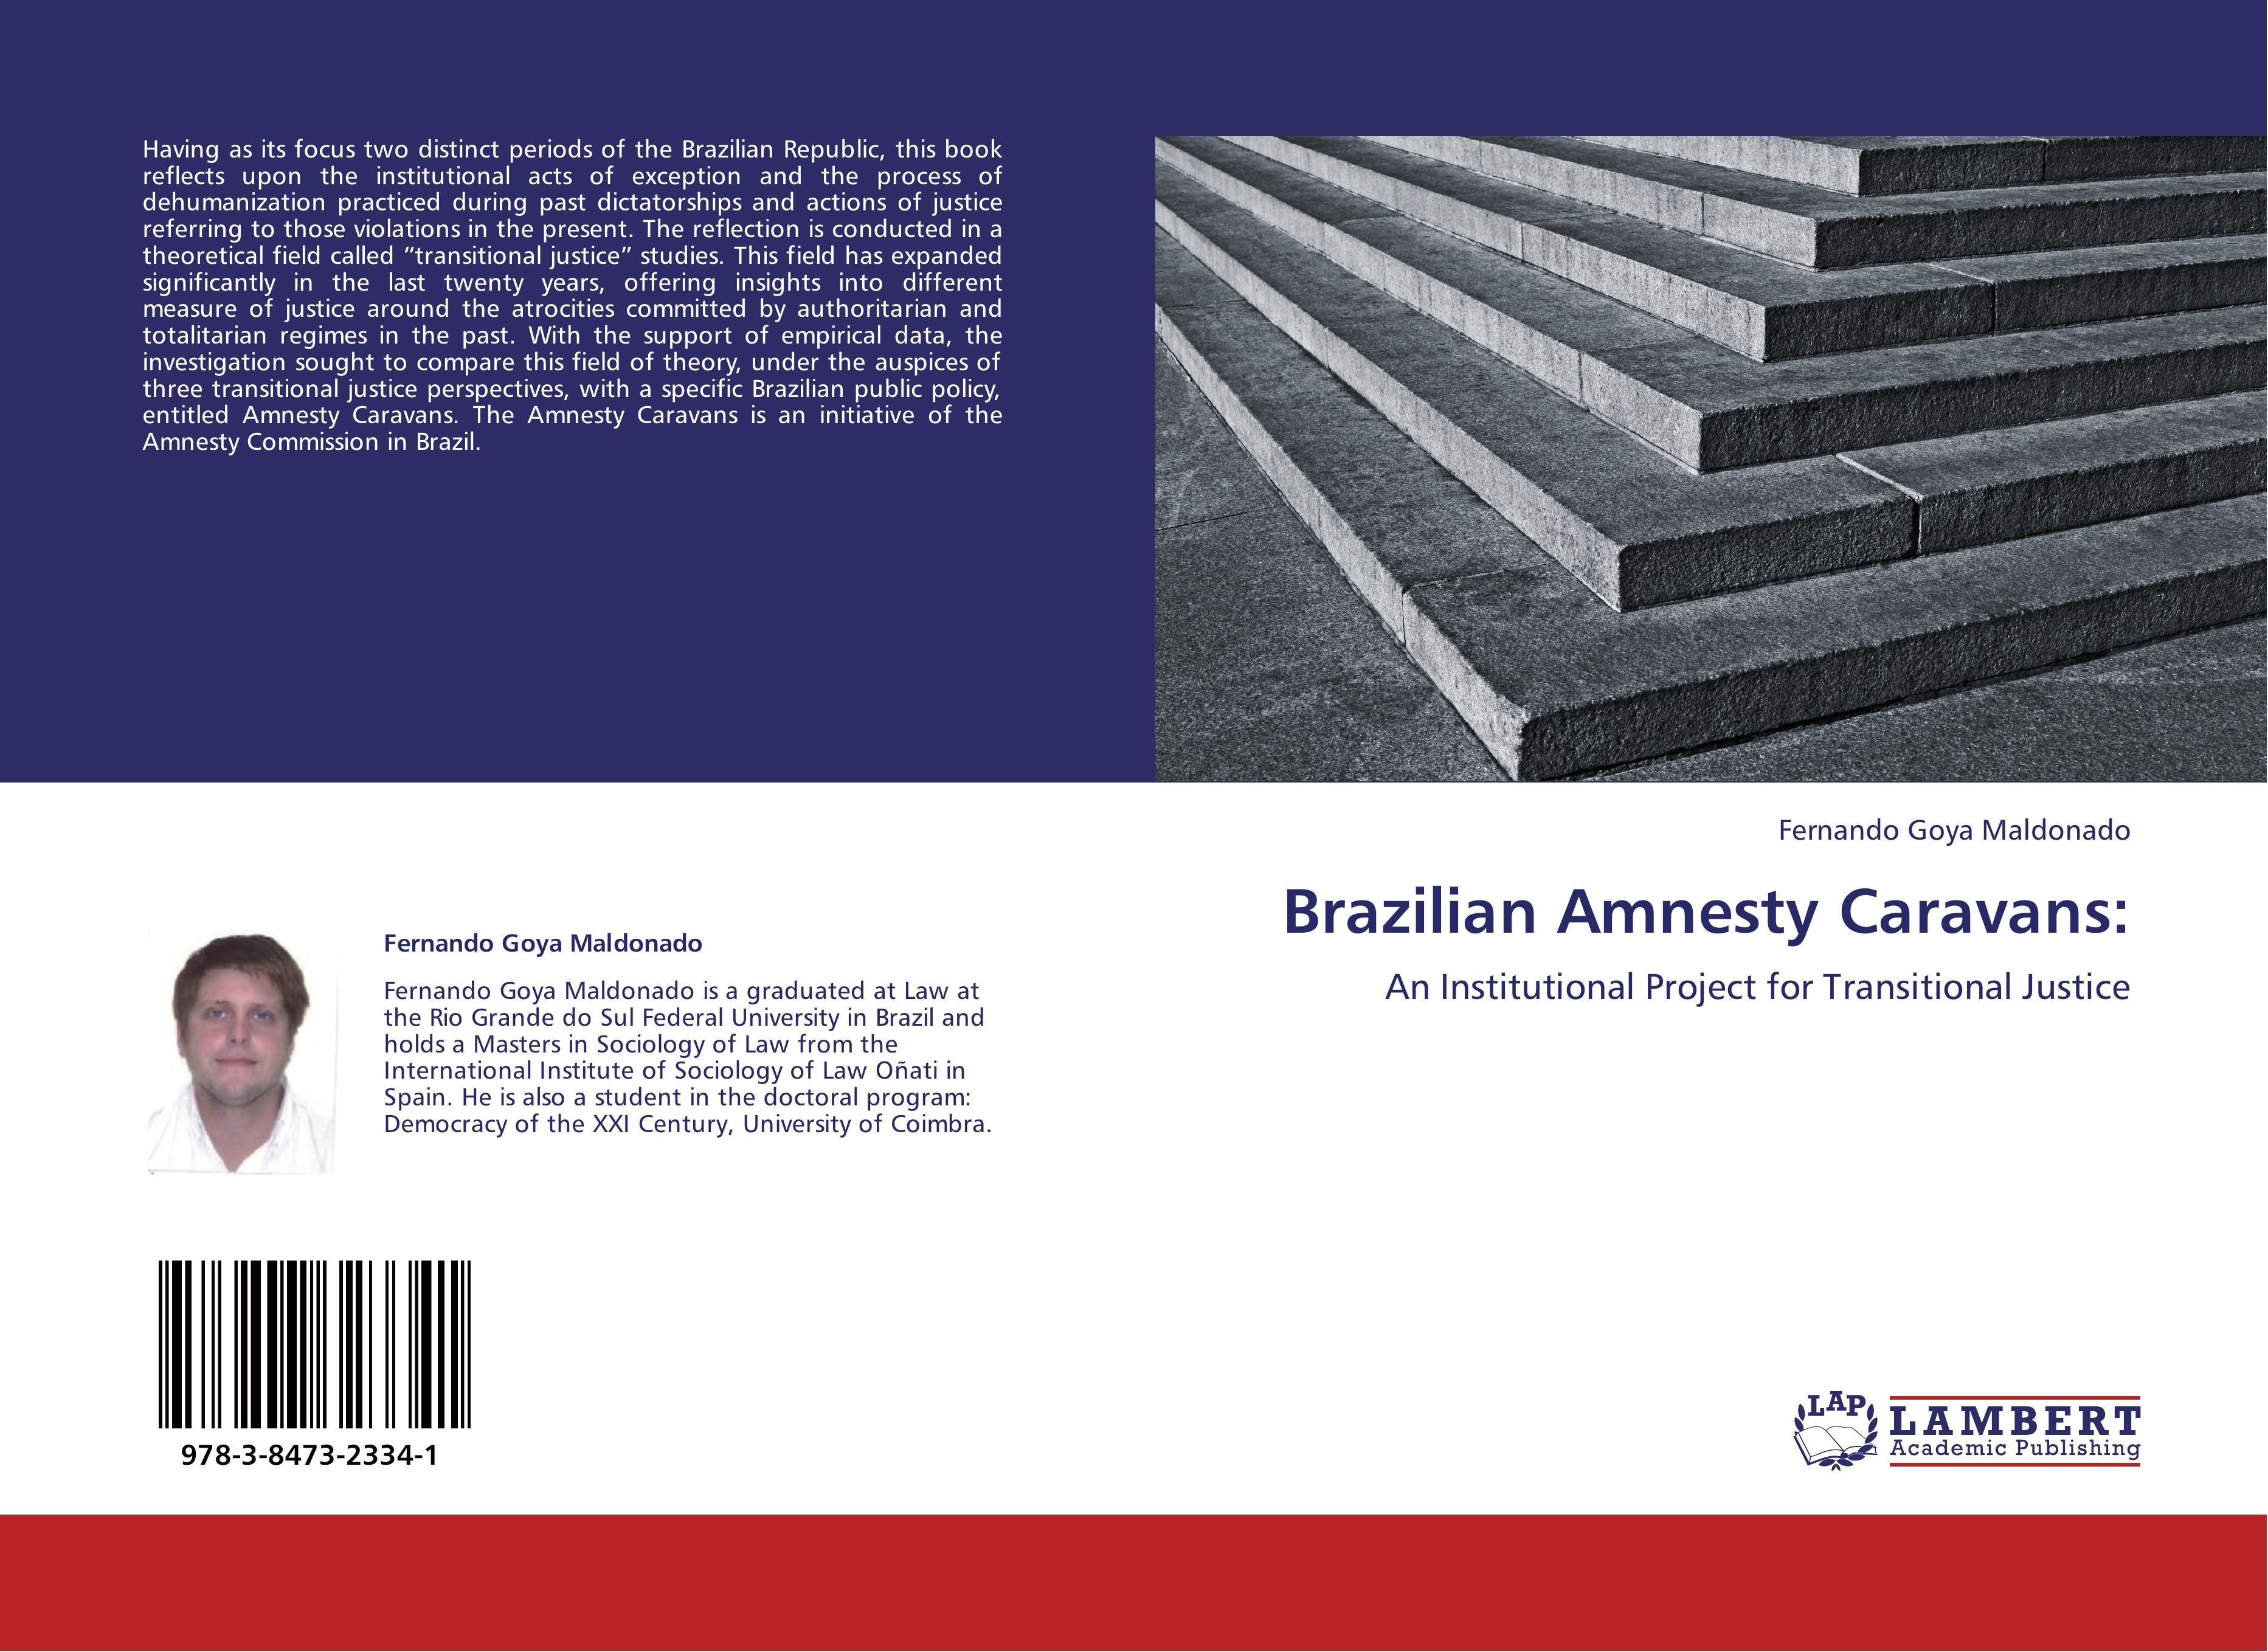 Brazilian Amnesty Caravans: / An Institutional Project for Transitional Justice / Fernando Goya Maldonado / Taschenbuch / Paperback / 96 S. / Englisch / 2012 / LAP LAMBERT Academic Publishing - Goya Maldonado, Fernando